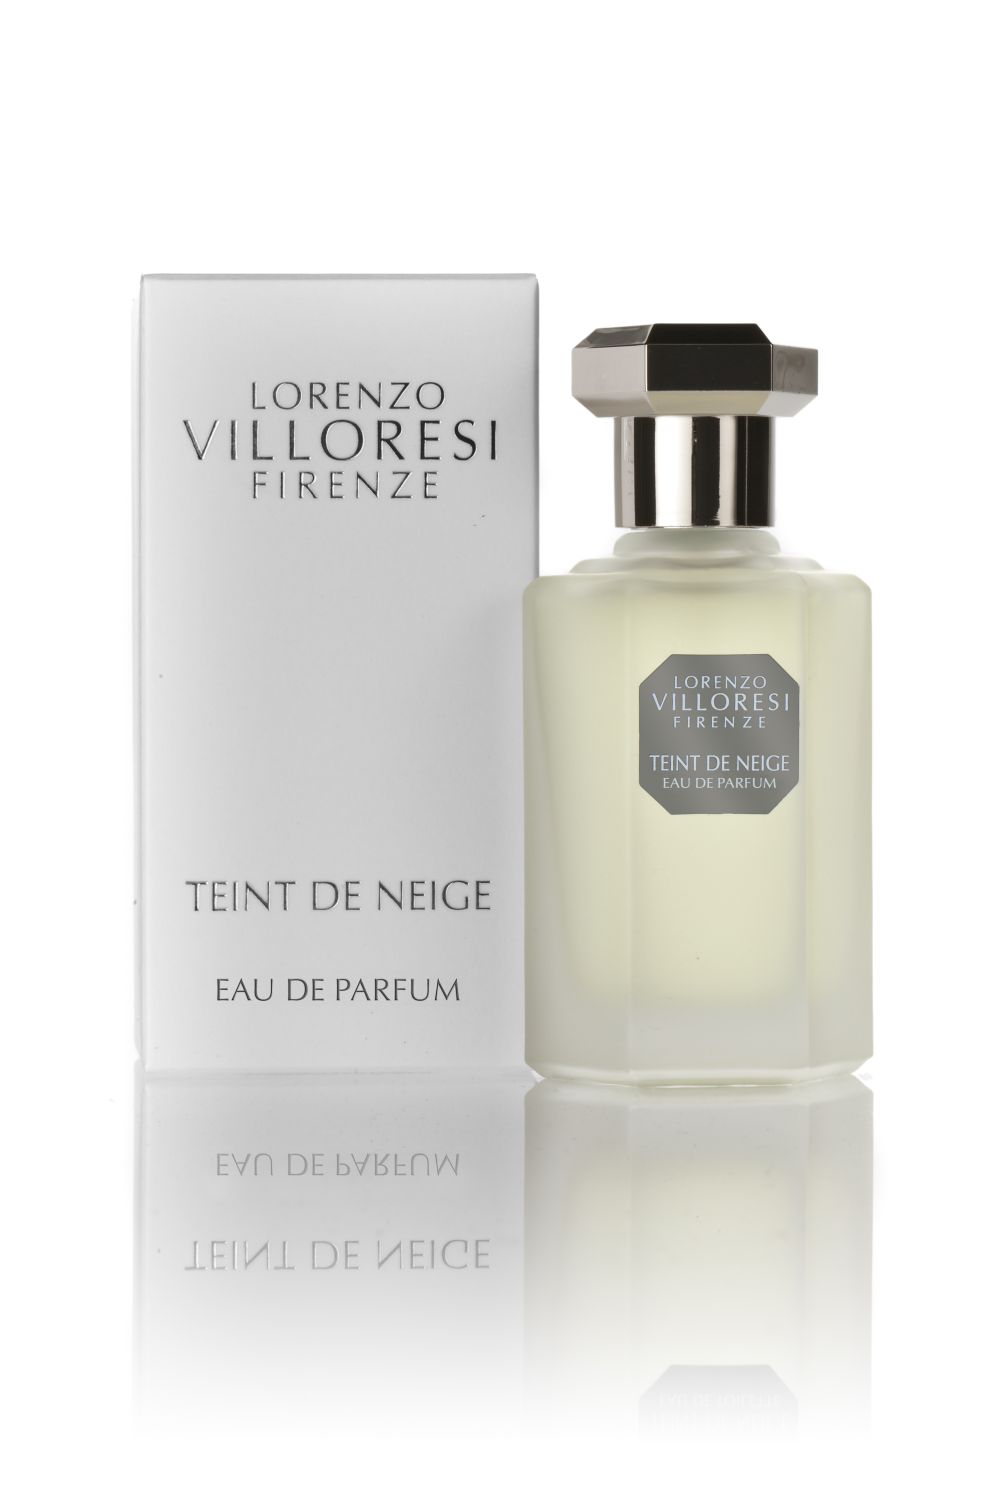 Lorenzo Villoresi - Teint de Neige - Eau de Parfum 100 ml